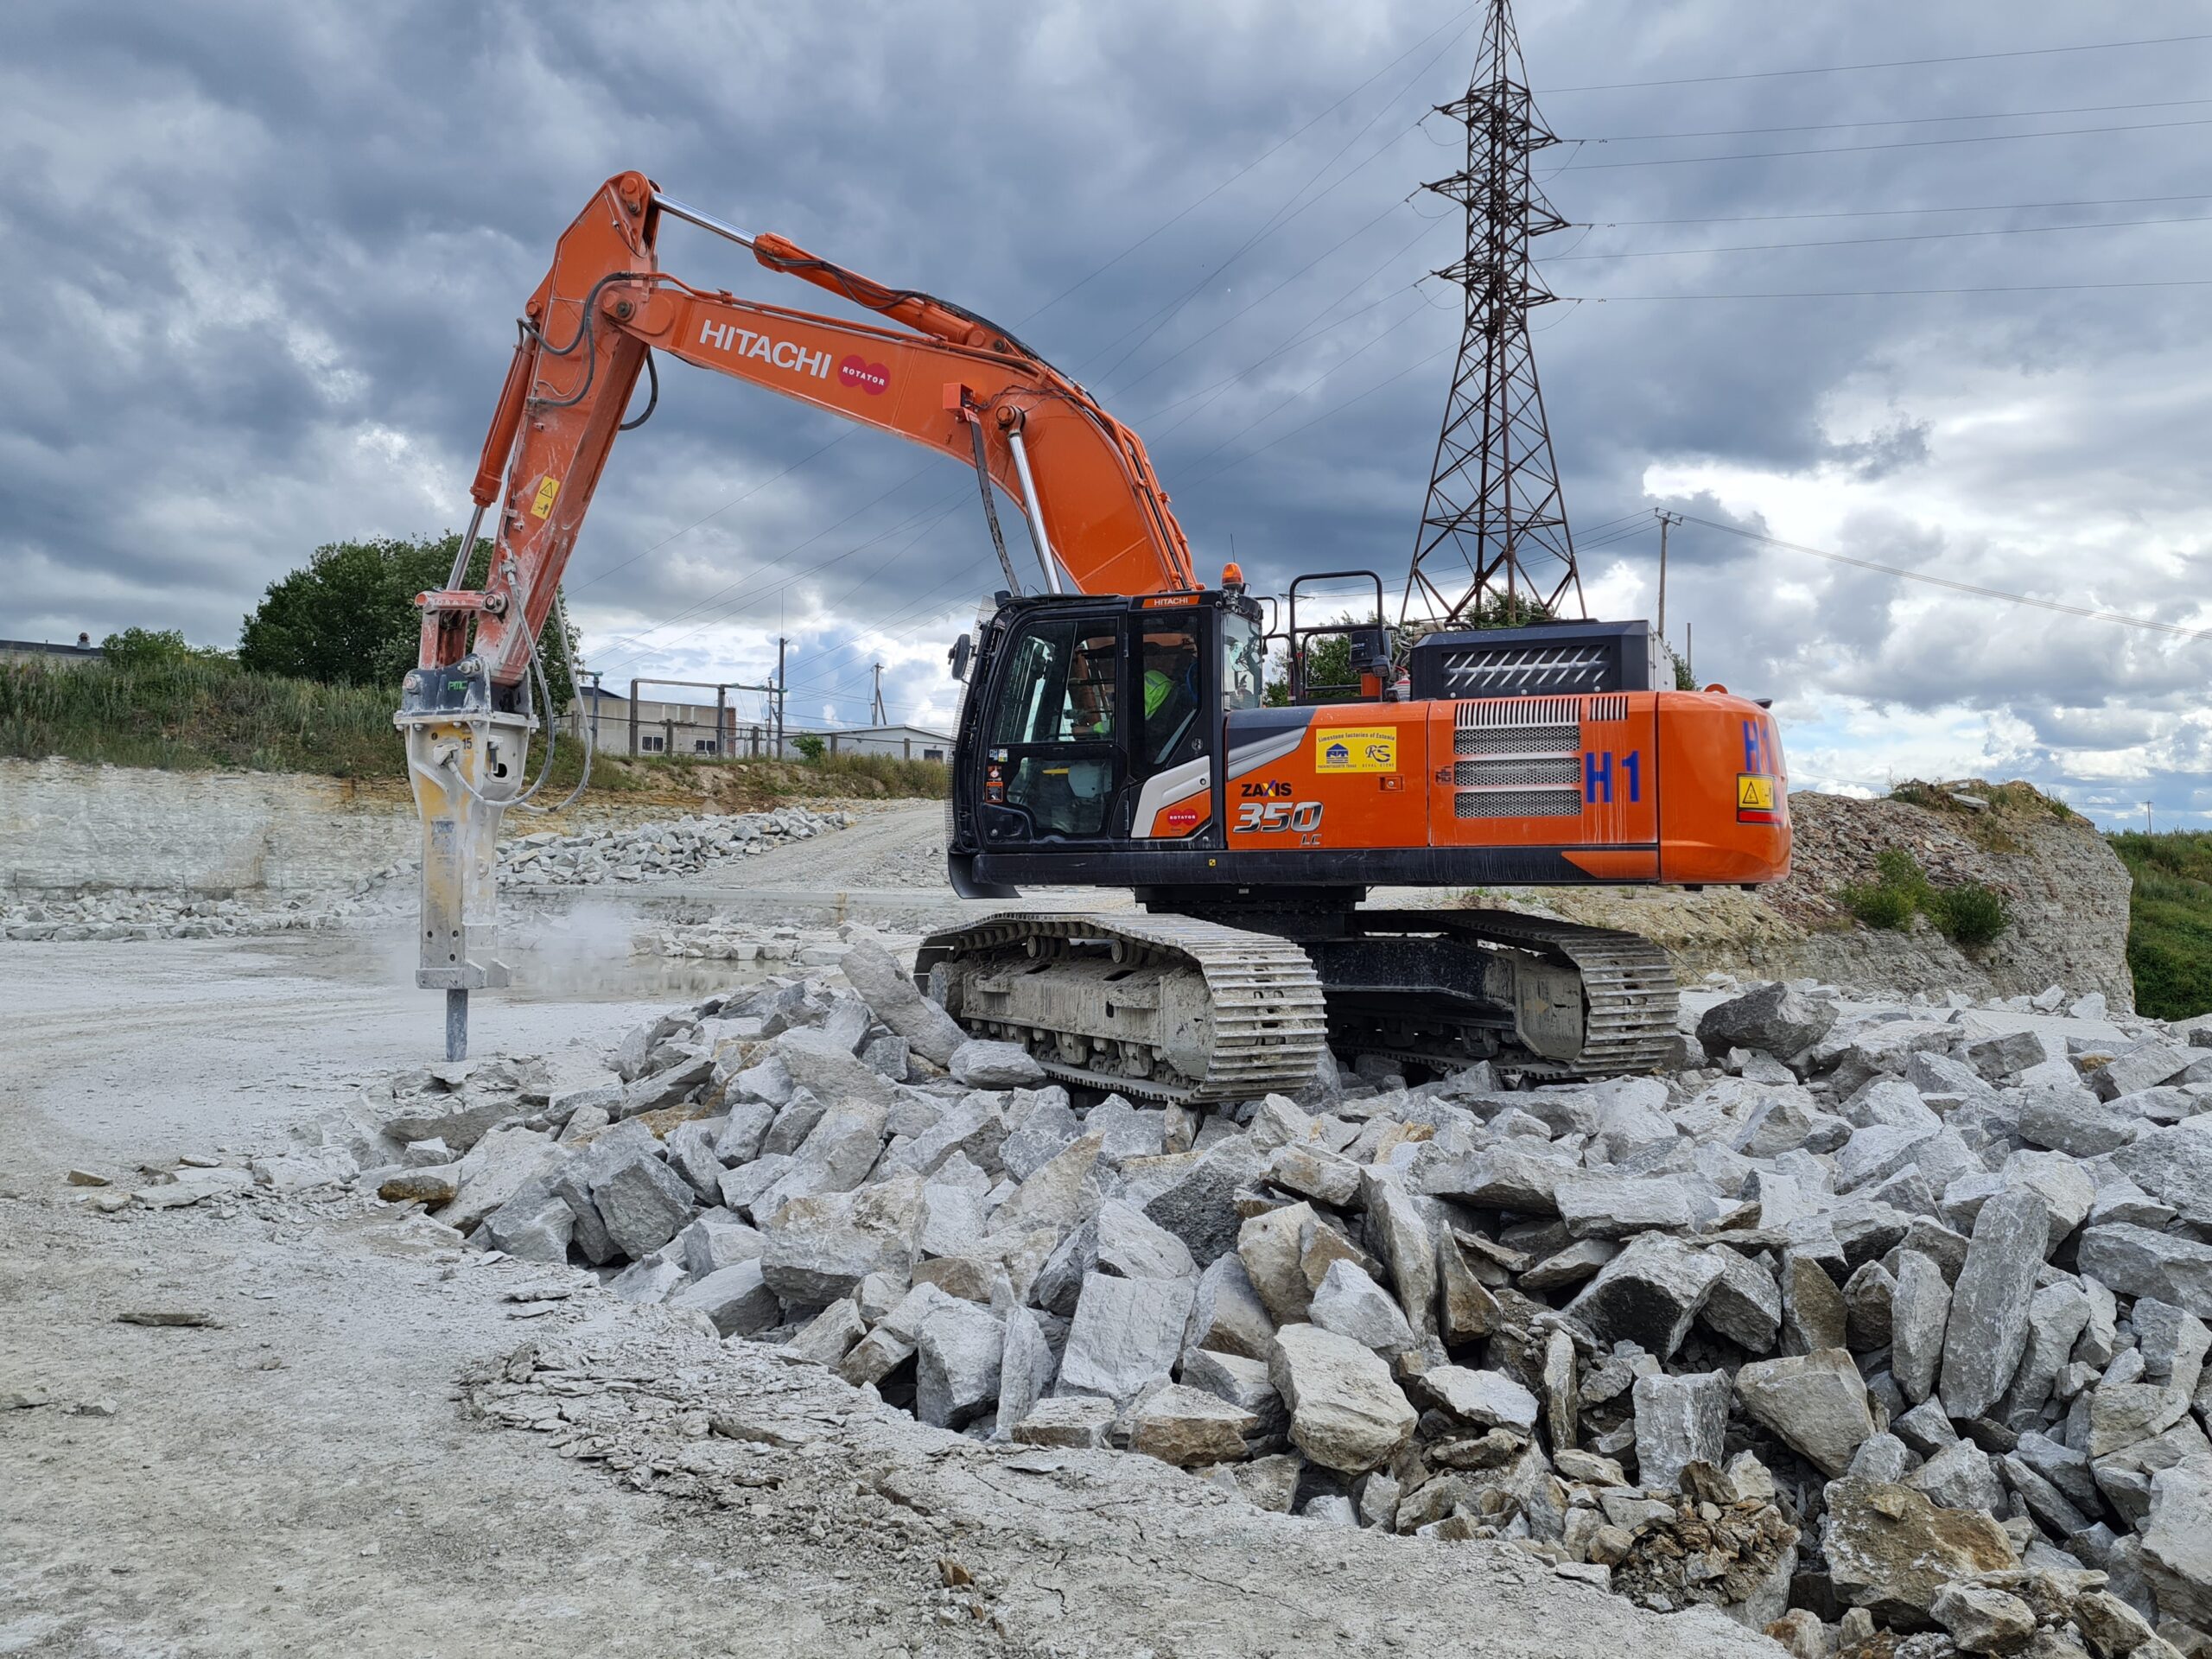 Limestone Factories of Estonia приобрела Hitachi экскаватор